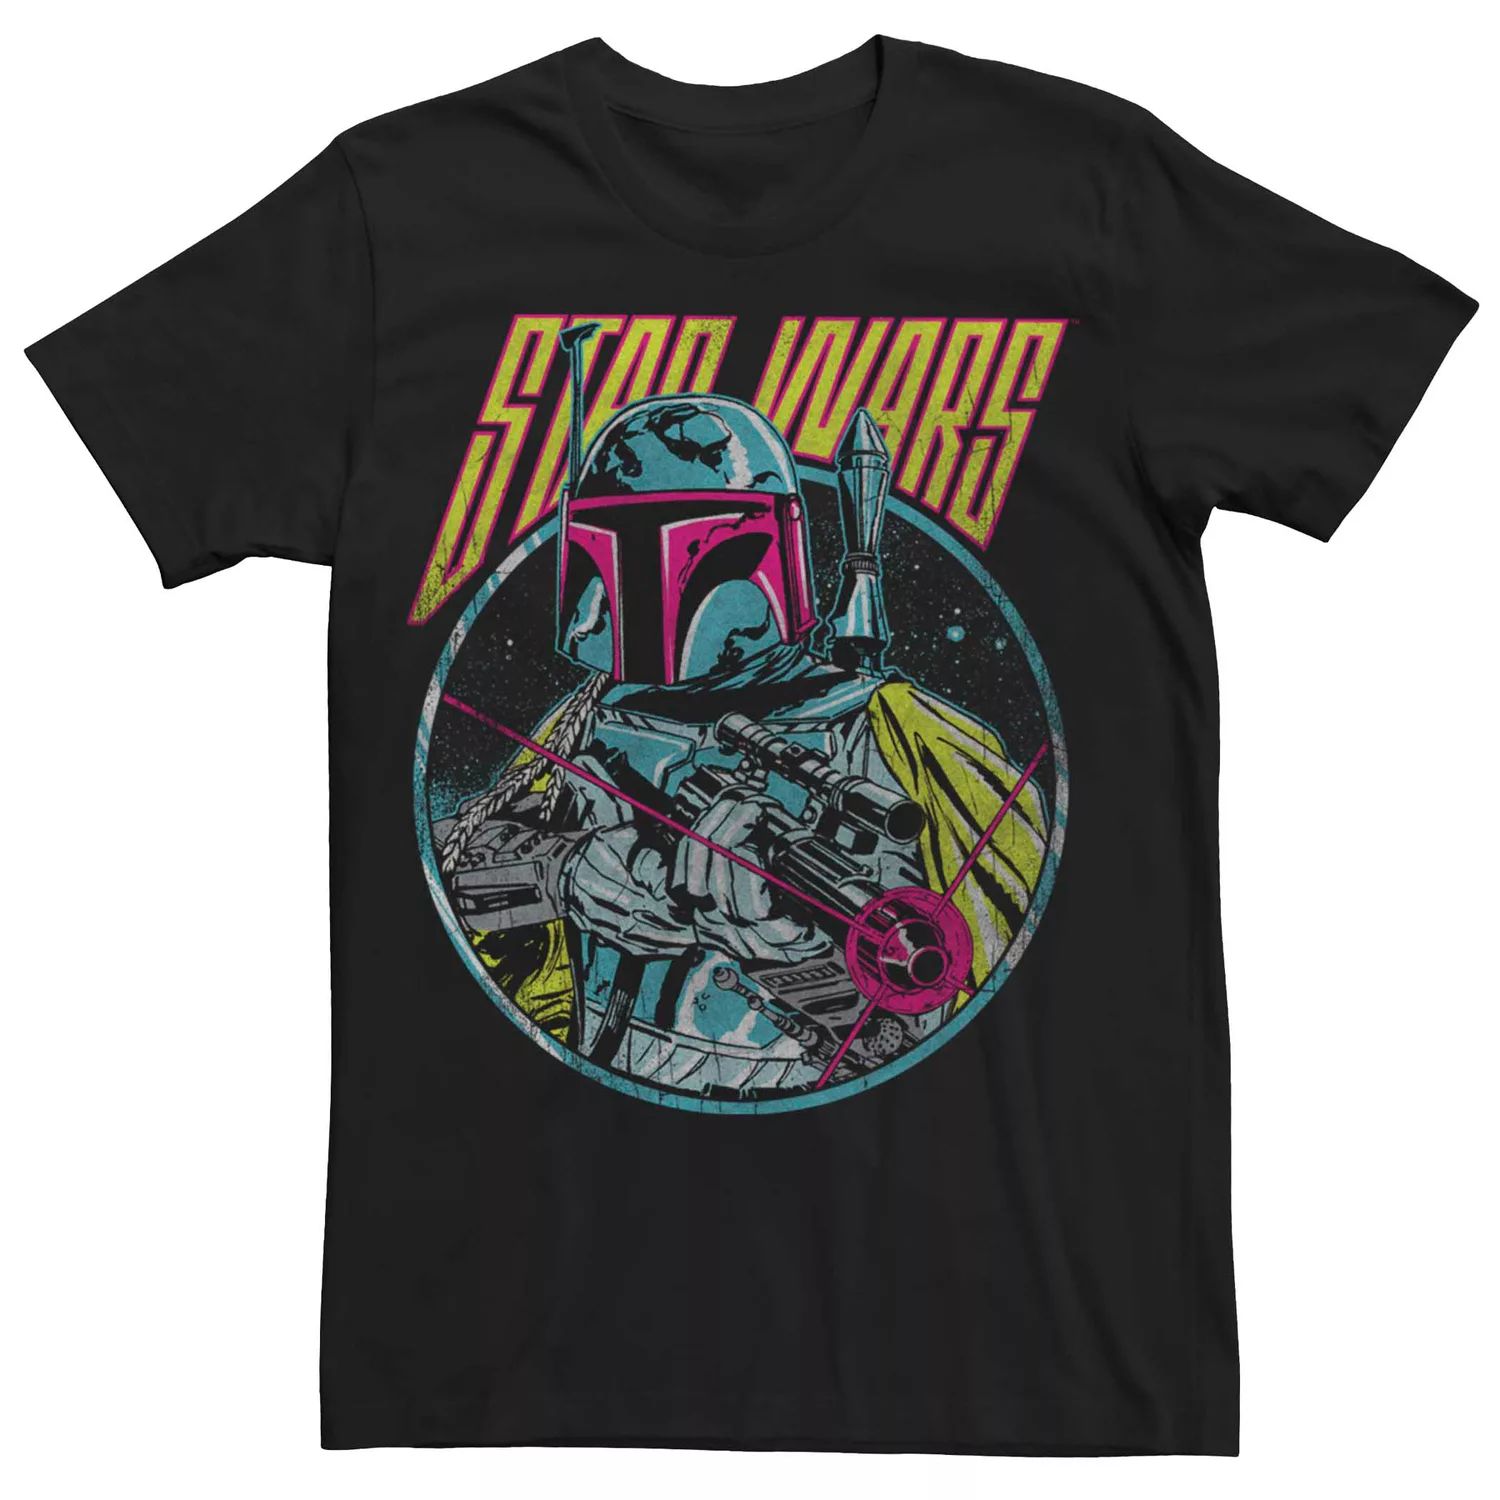 Мужская винтажная футболка с плакатом «Звездные войны» Licensed Character цена и фото